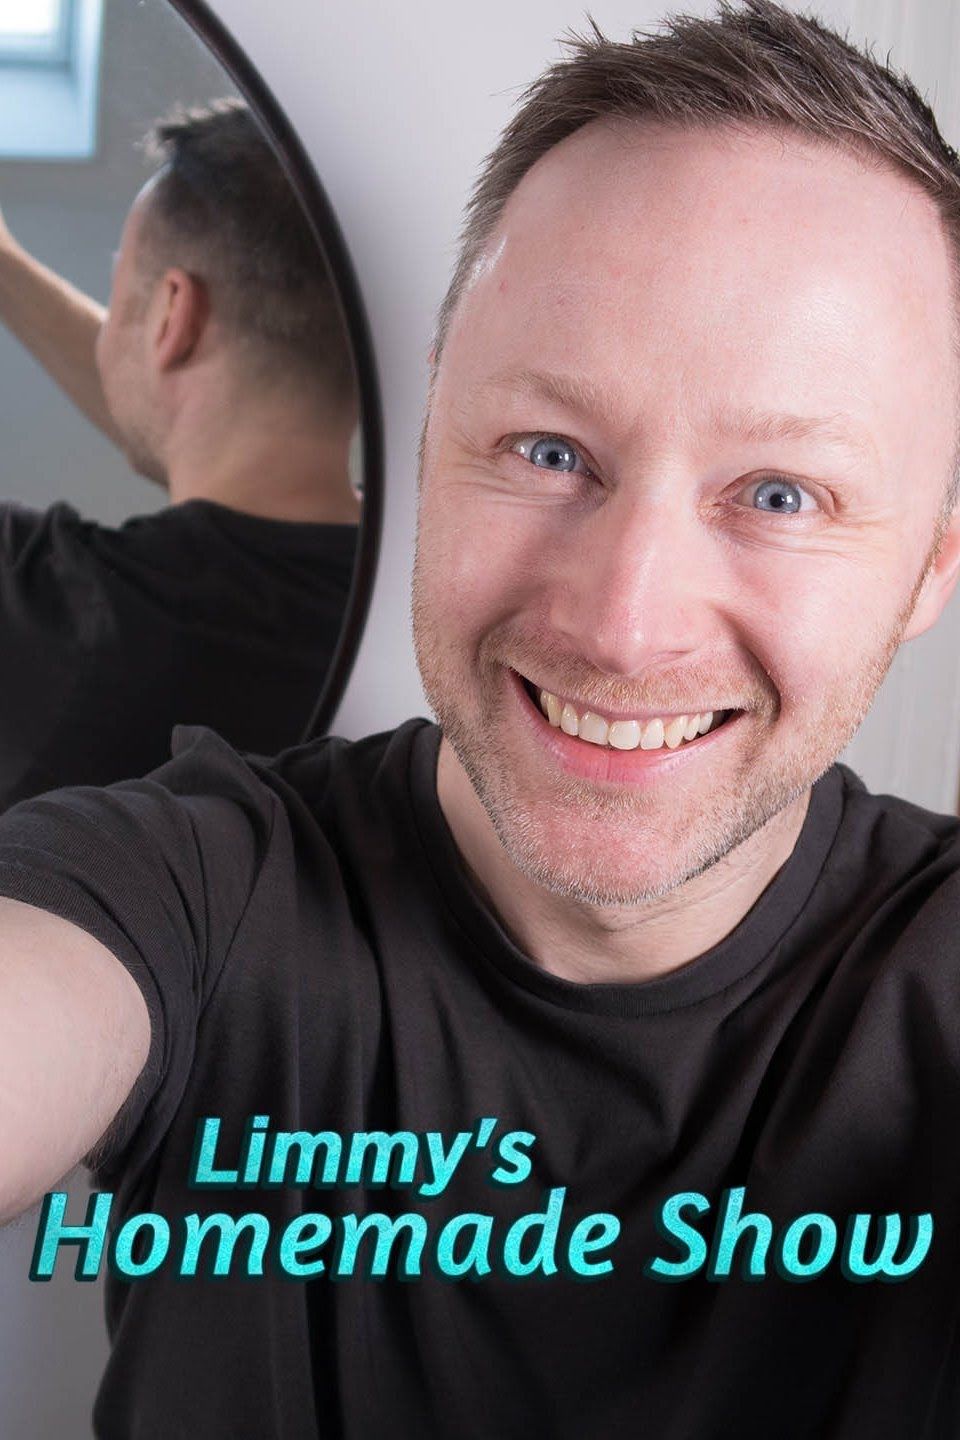 Limmy's Homemade Show